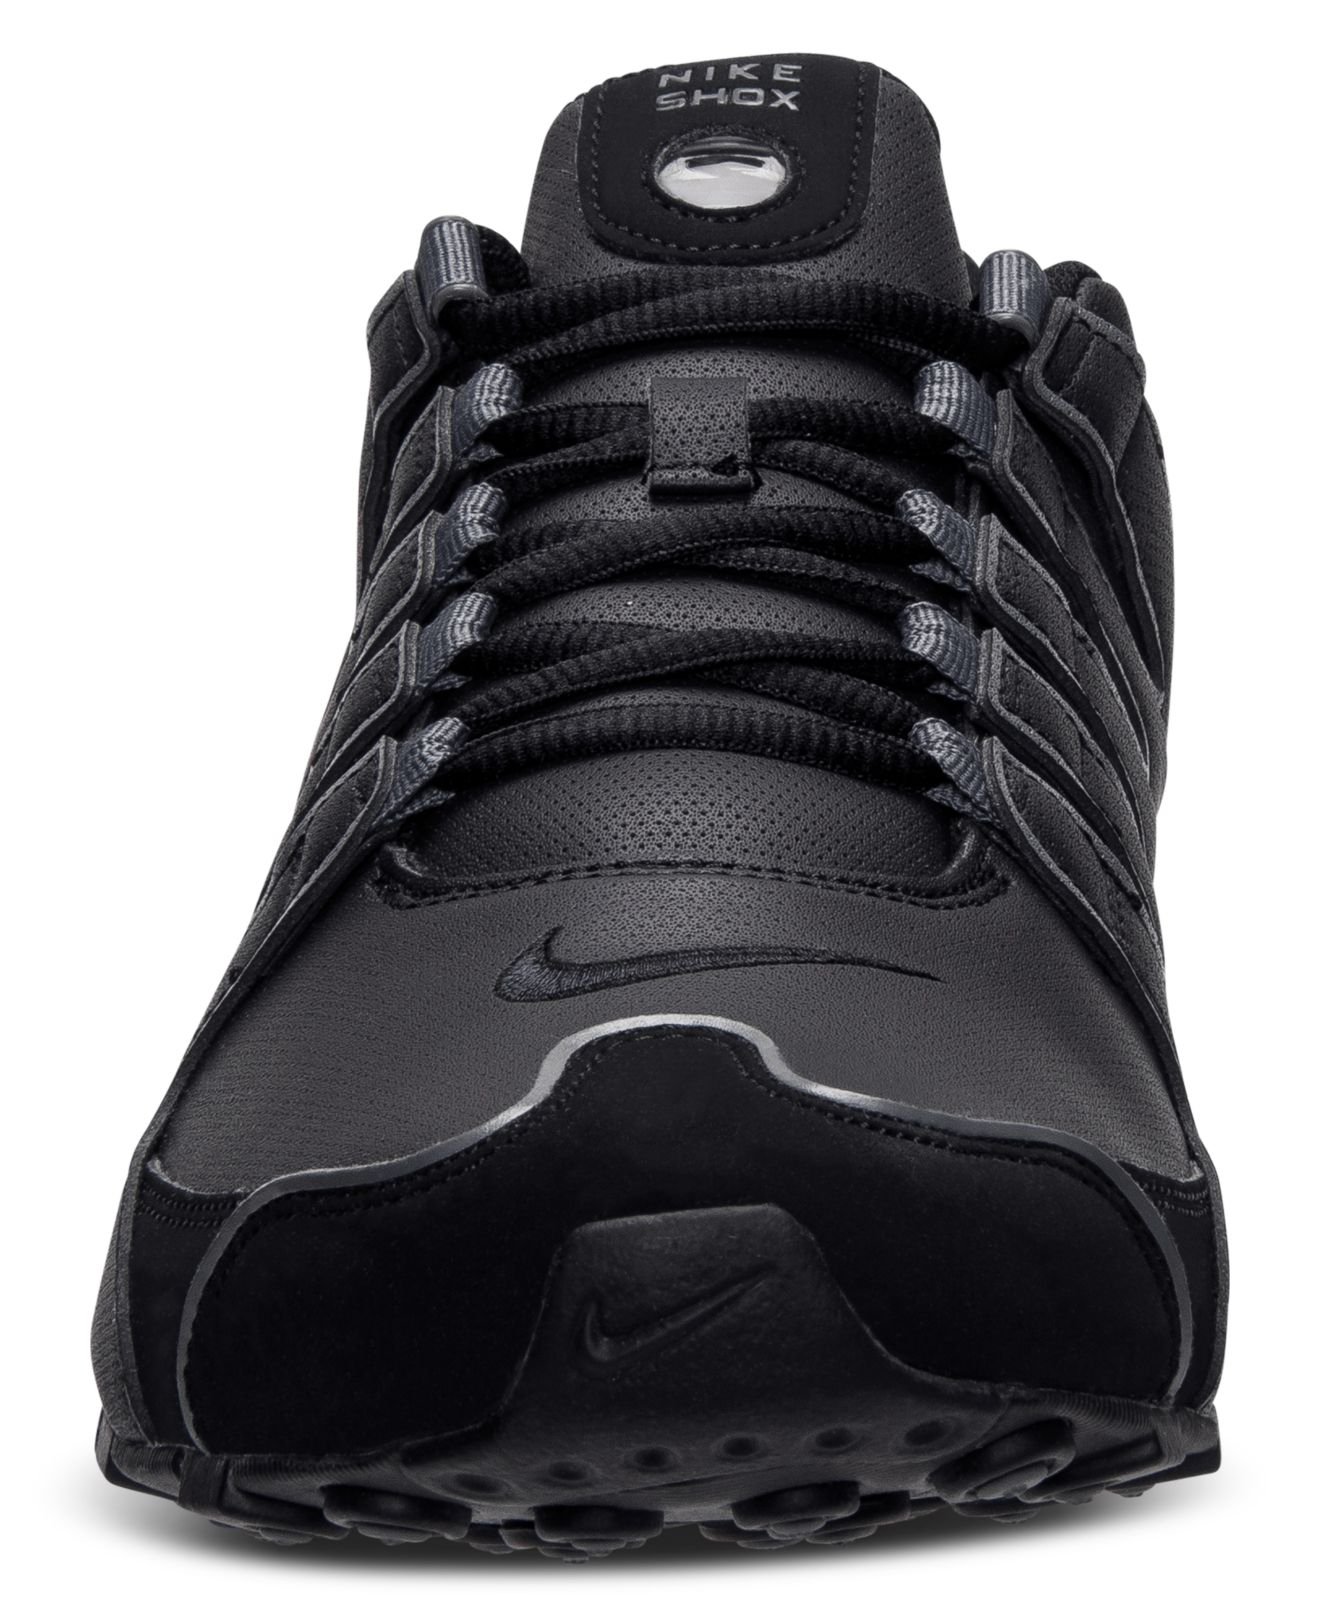 Lyst - Nike Men's Shox Nz Sl Running Sneakers From Finish Line in Black ...